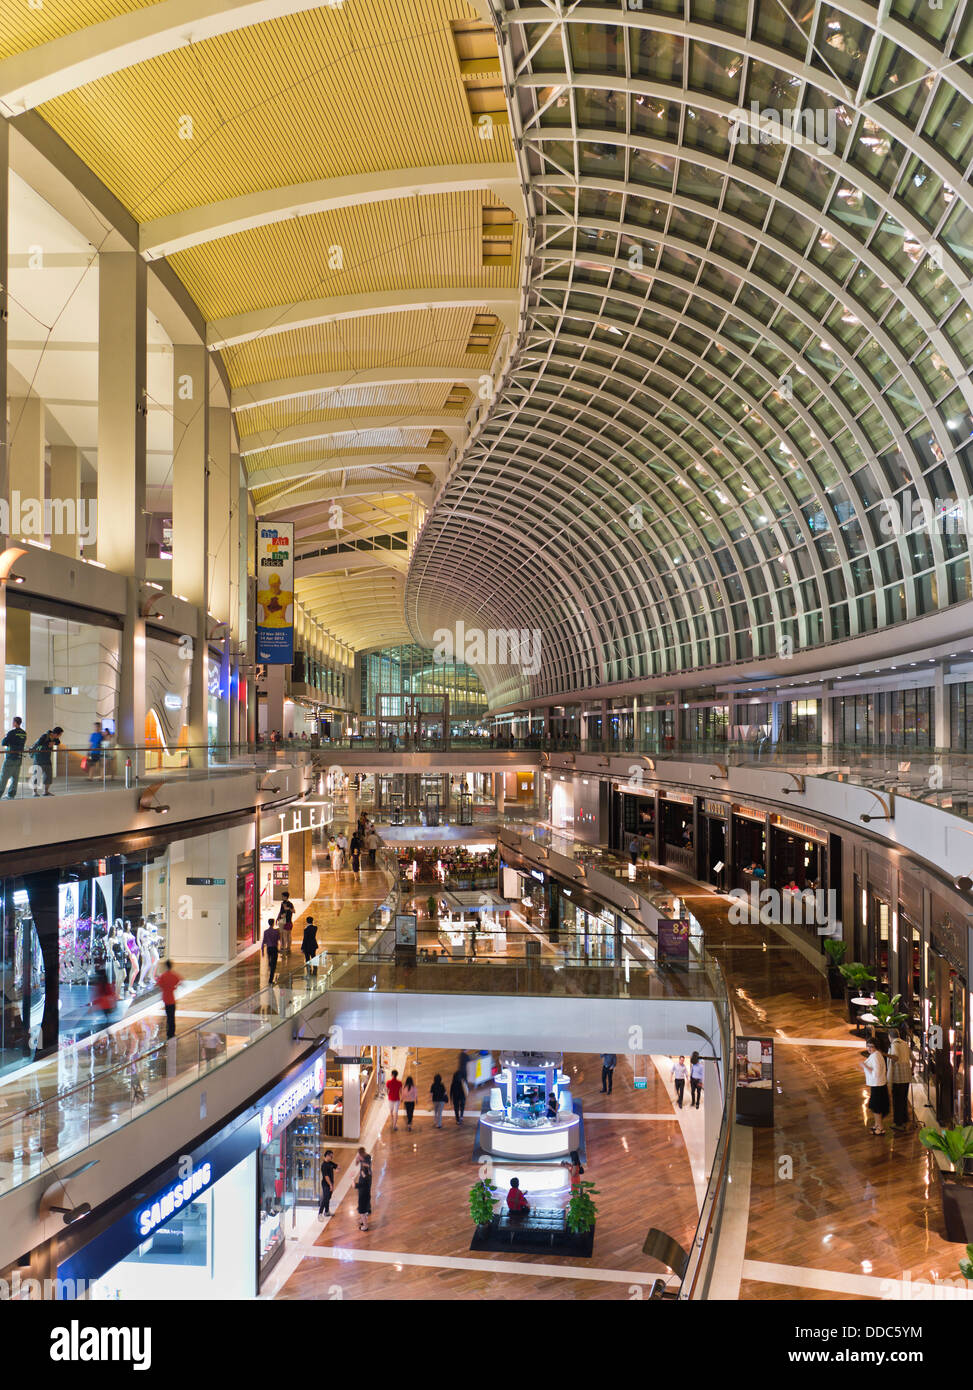 dh Marina Bay Sands MARINA BAY SINGAPORE Modern luxury shopping mall arcade architecture interior centre Stock Photo